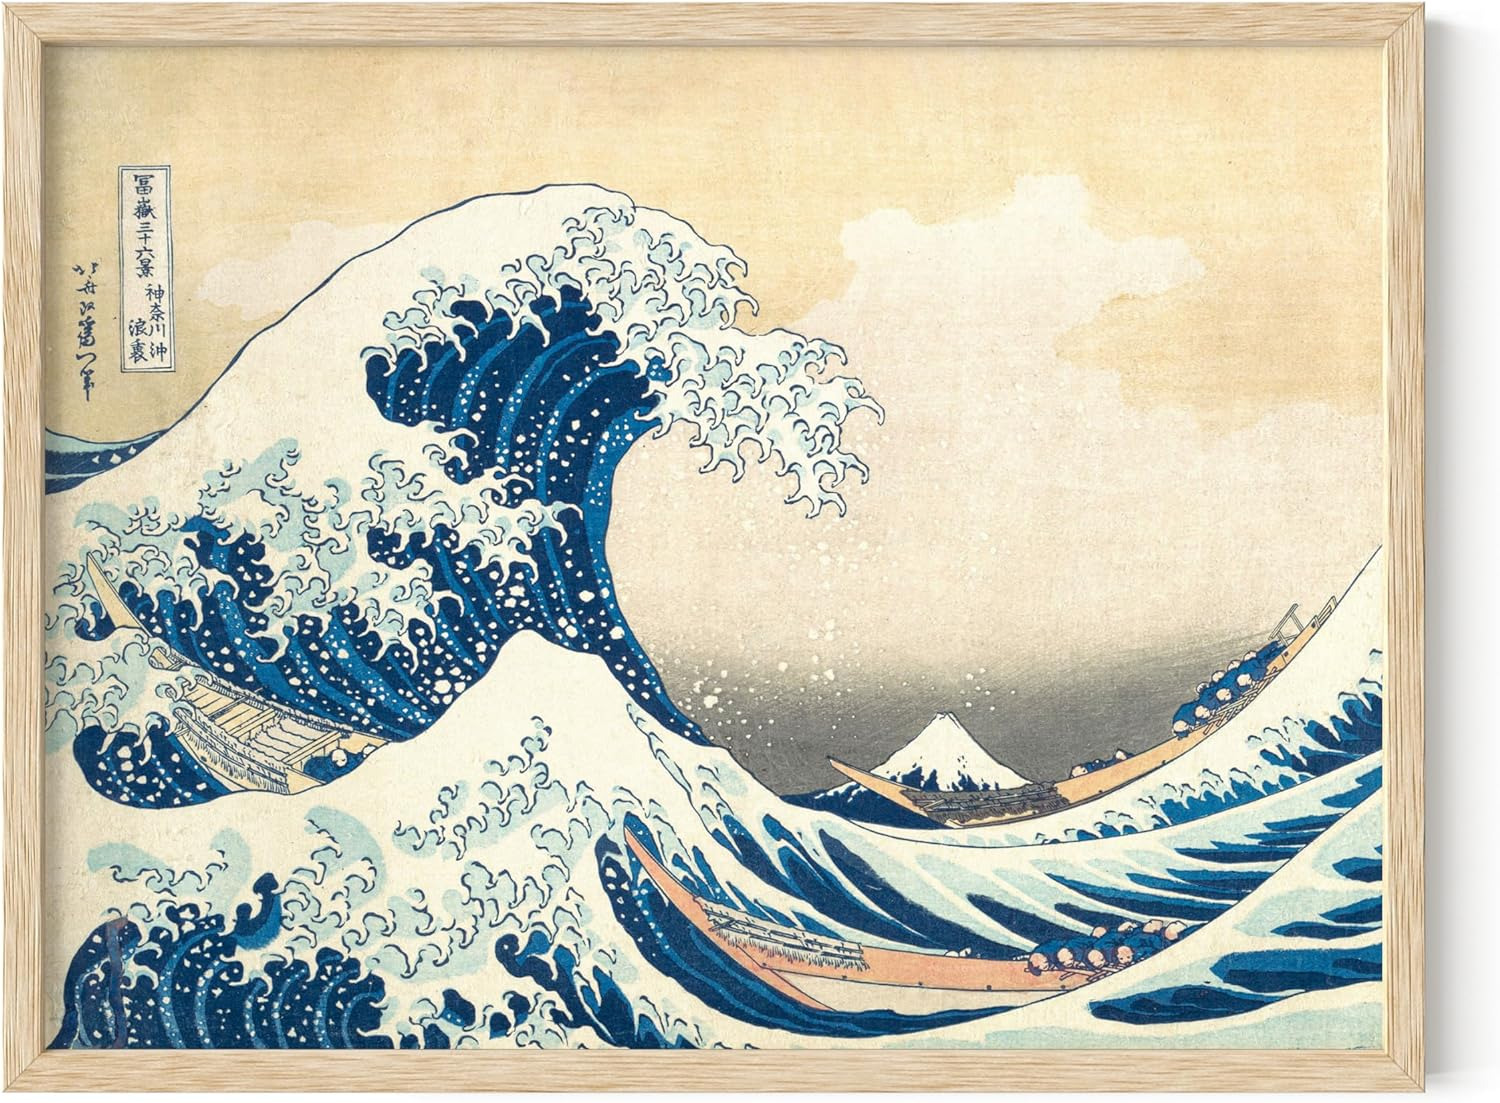 Japanese Traditional Art - Hokusai Classic Kanagawa Wave Framed Print, the Great